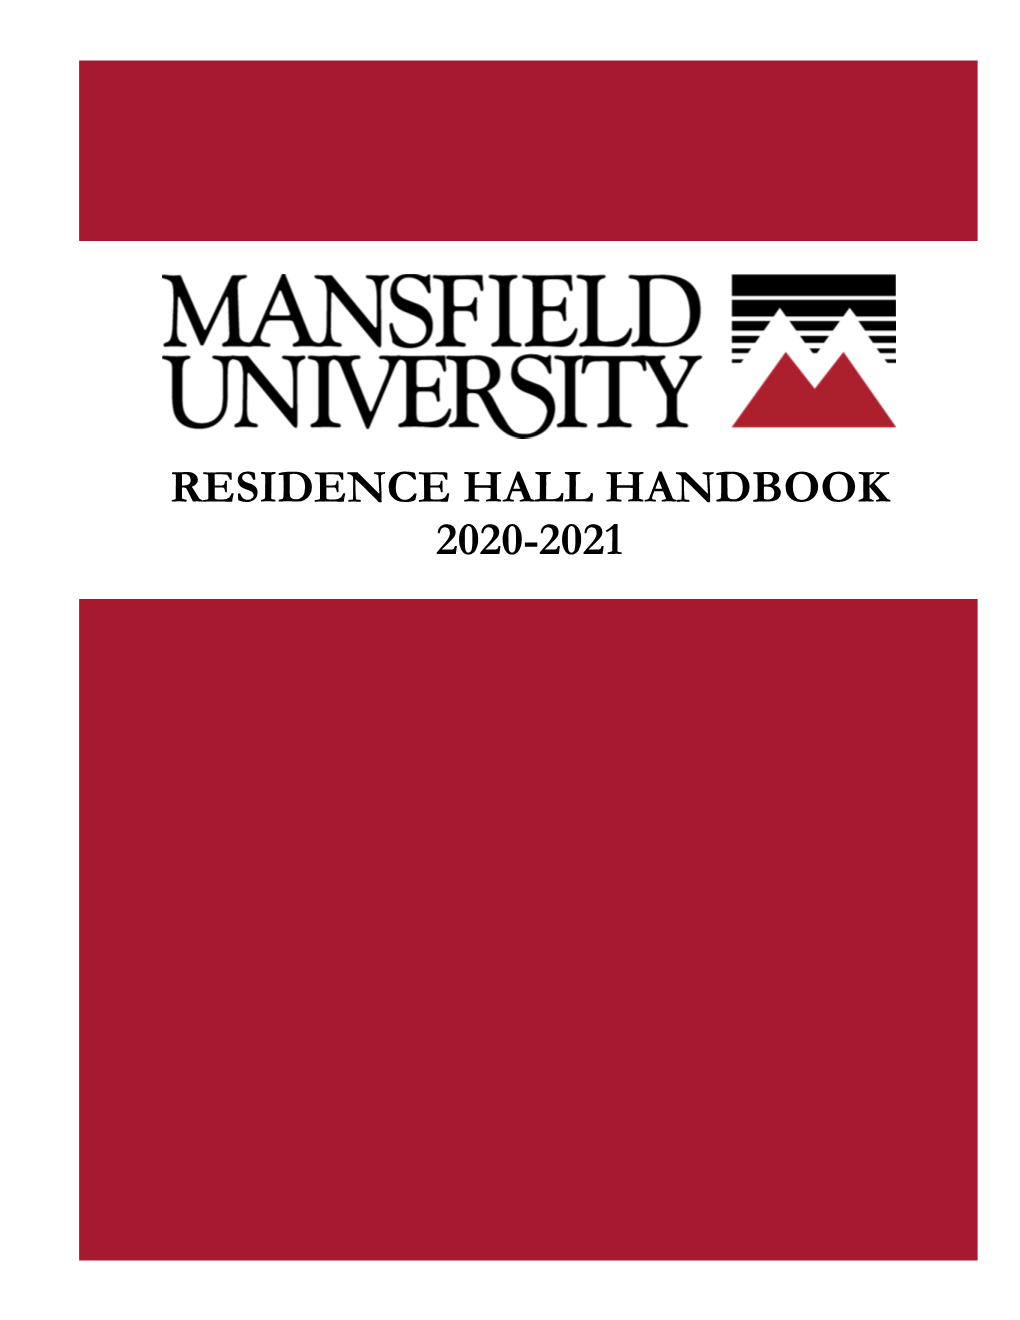 The Residence Hall Handbook